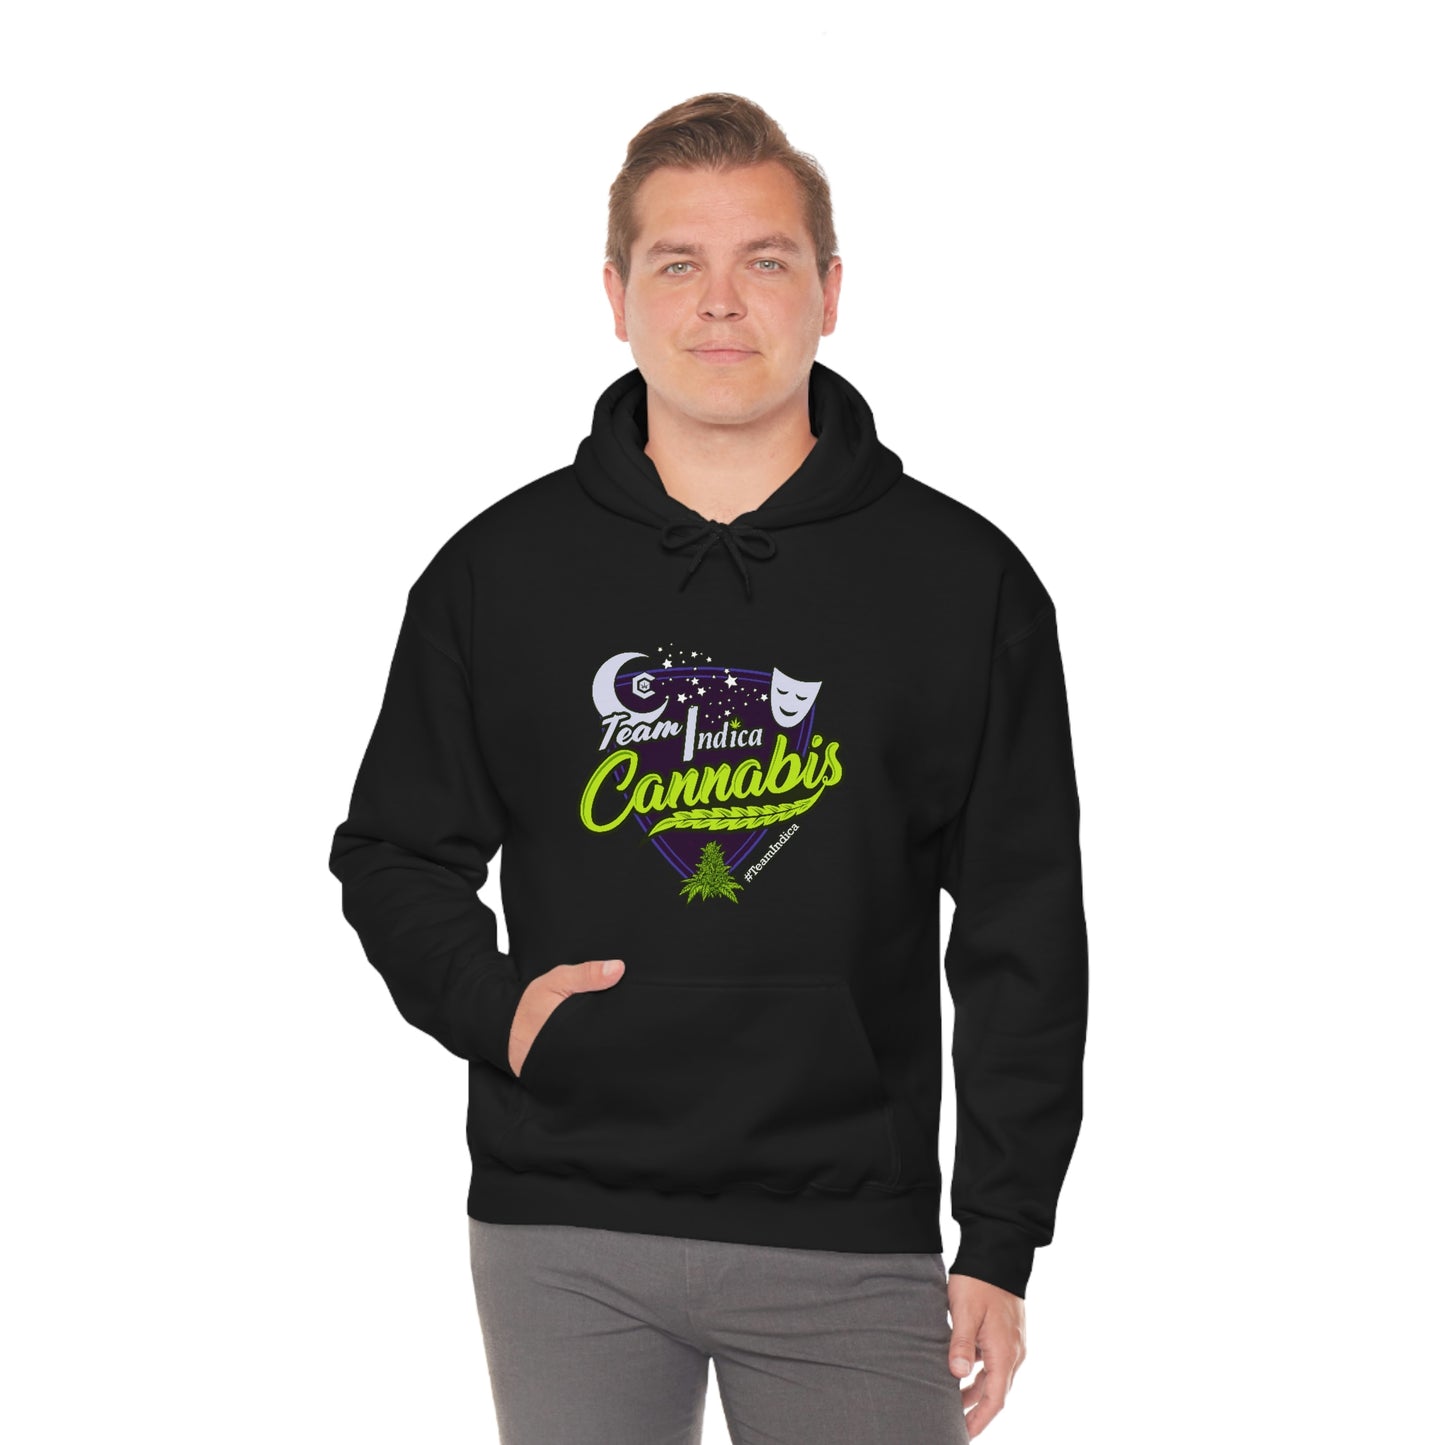 a man wearing a black Team Indica Cannabis Pullover hoodie.